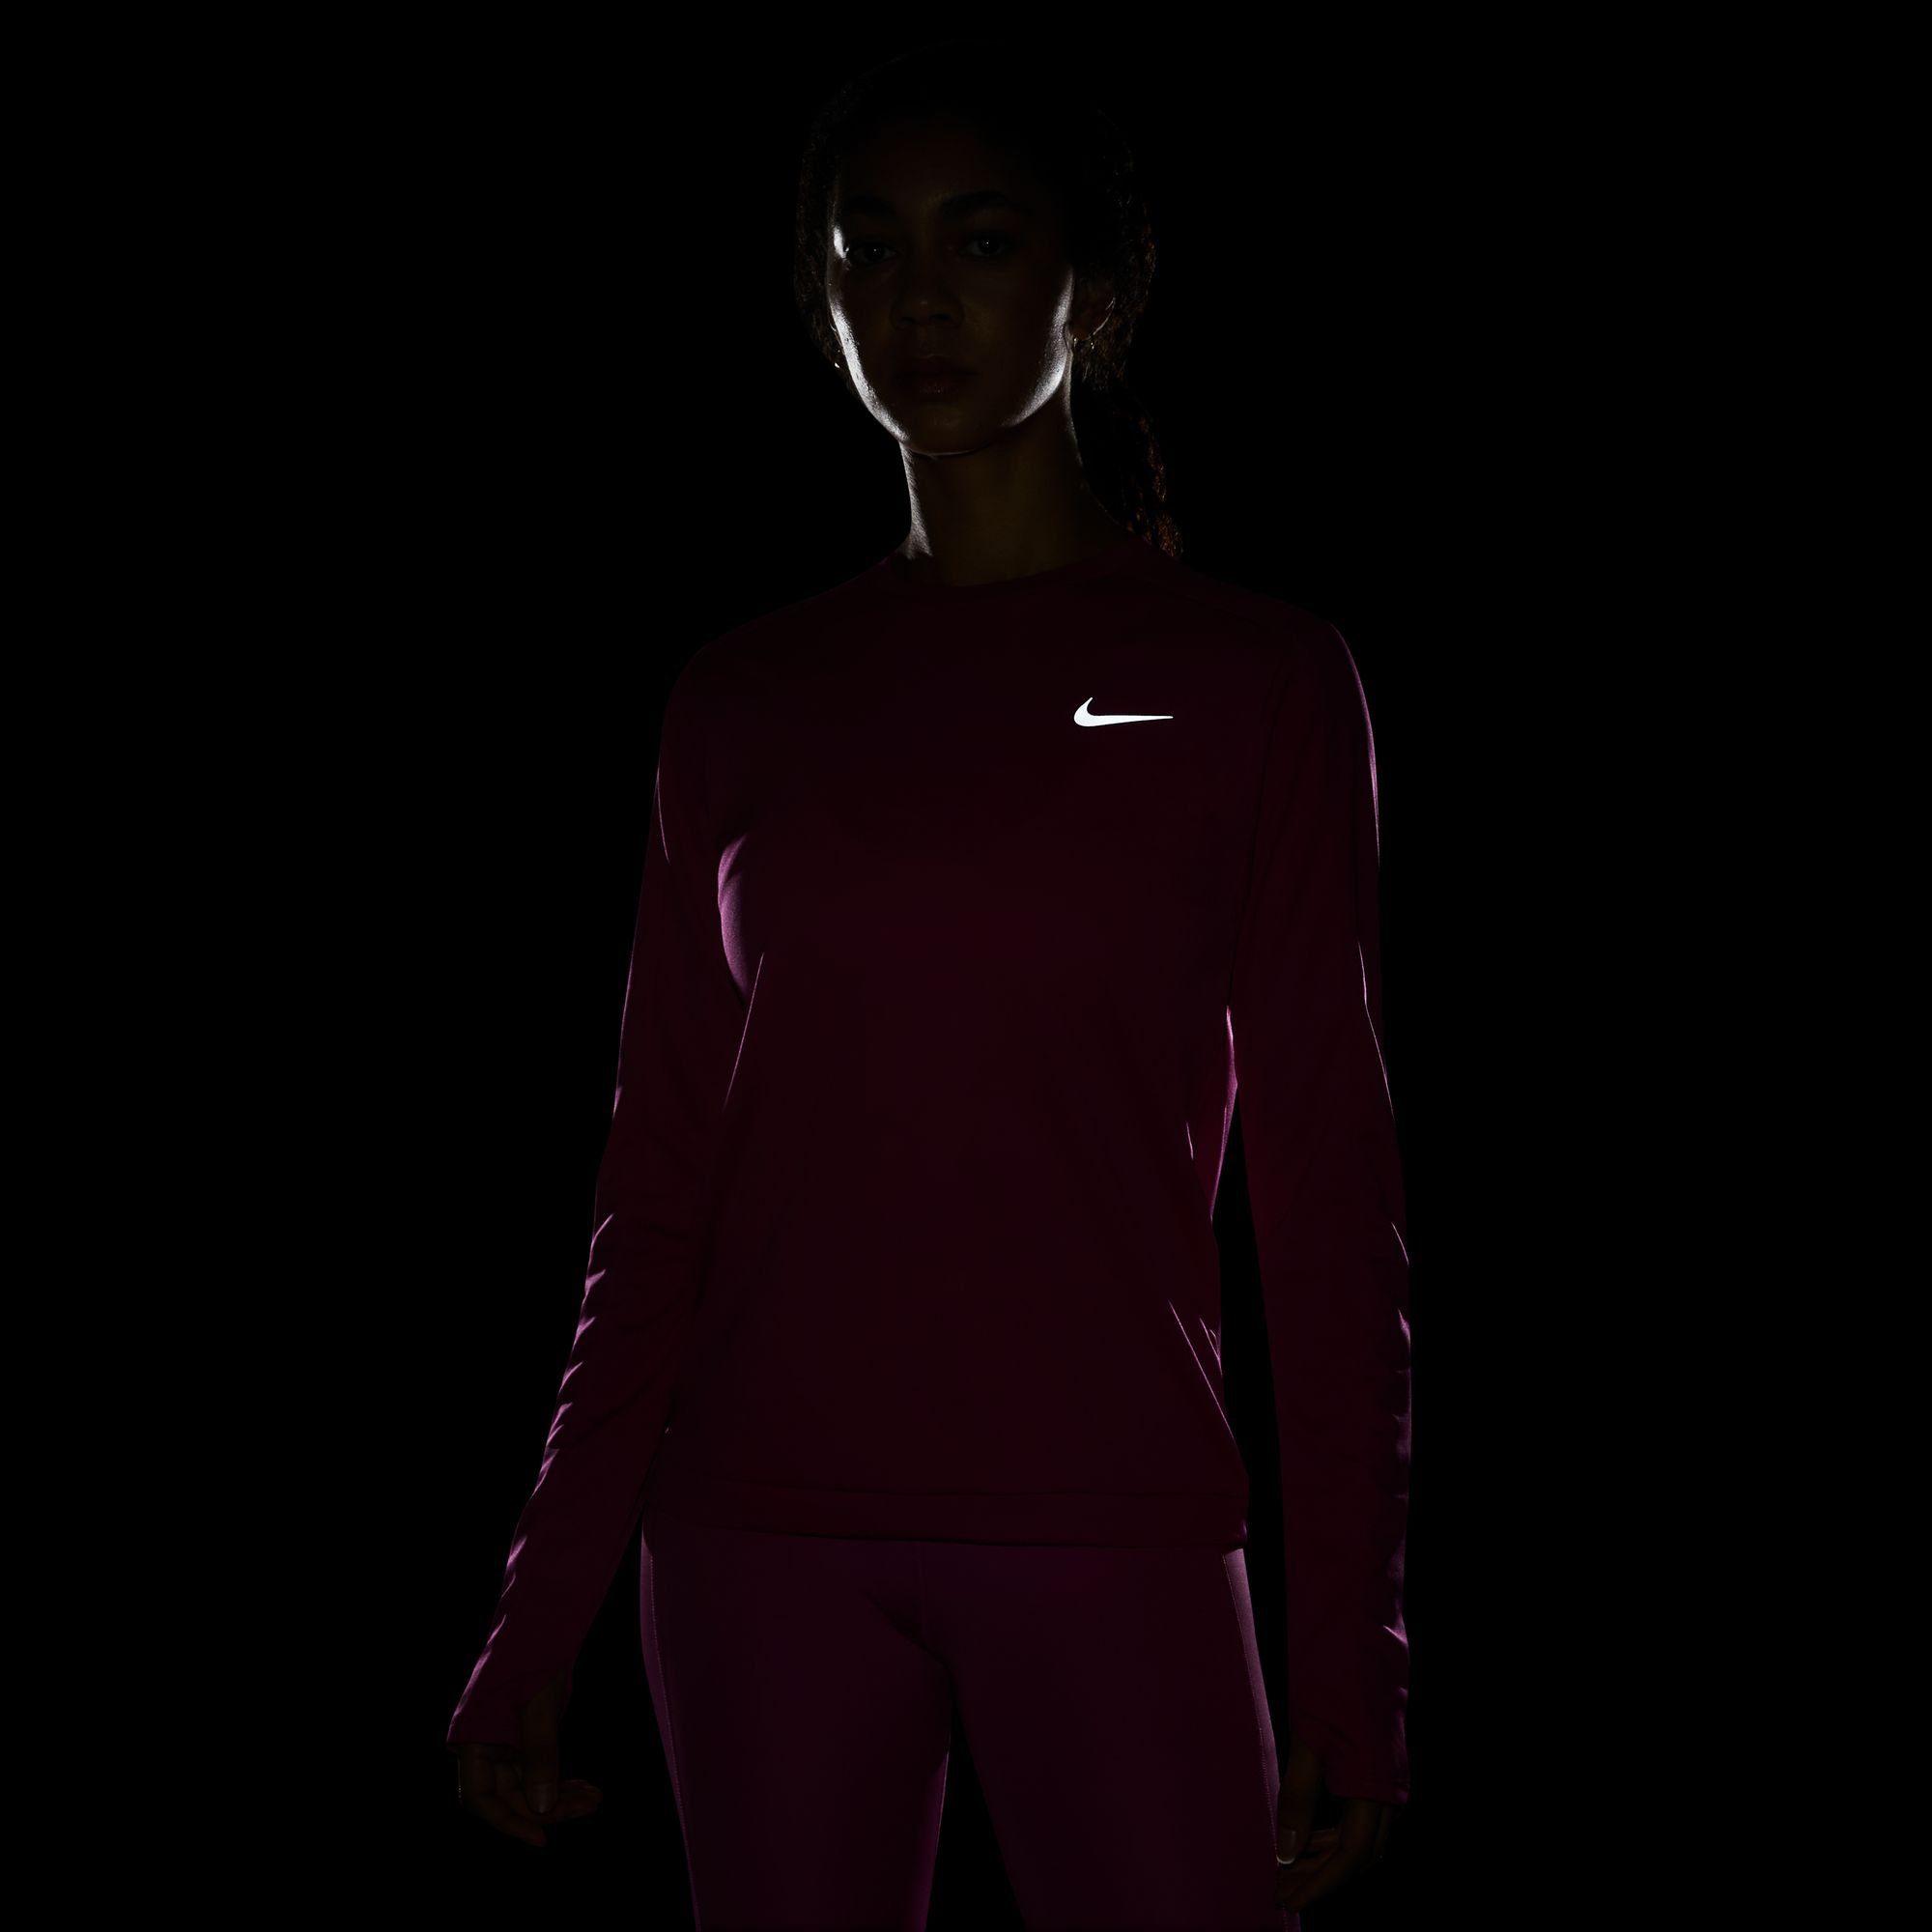 SILV DRI-FIT FIREBERRY/REFLECTIVE Laufshirt Nike WOMEN'S CREW-NECK TOP RUNNING